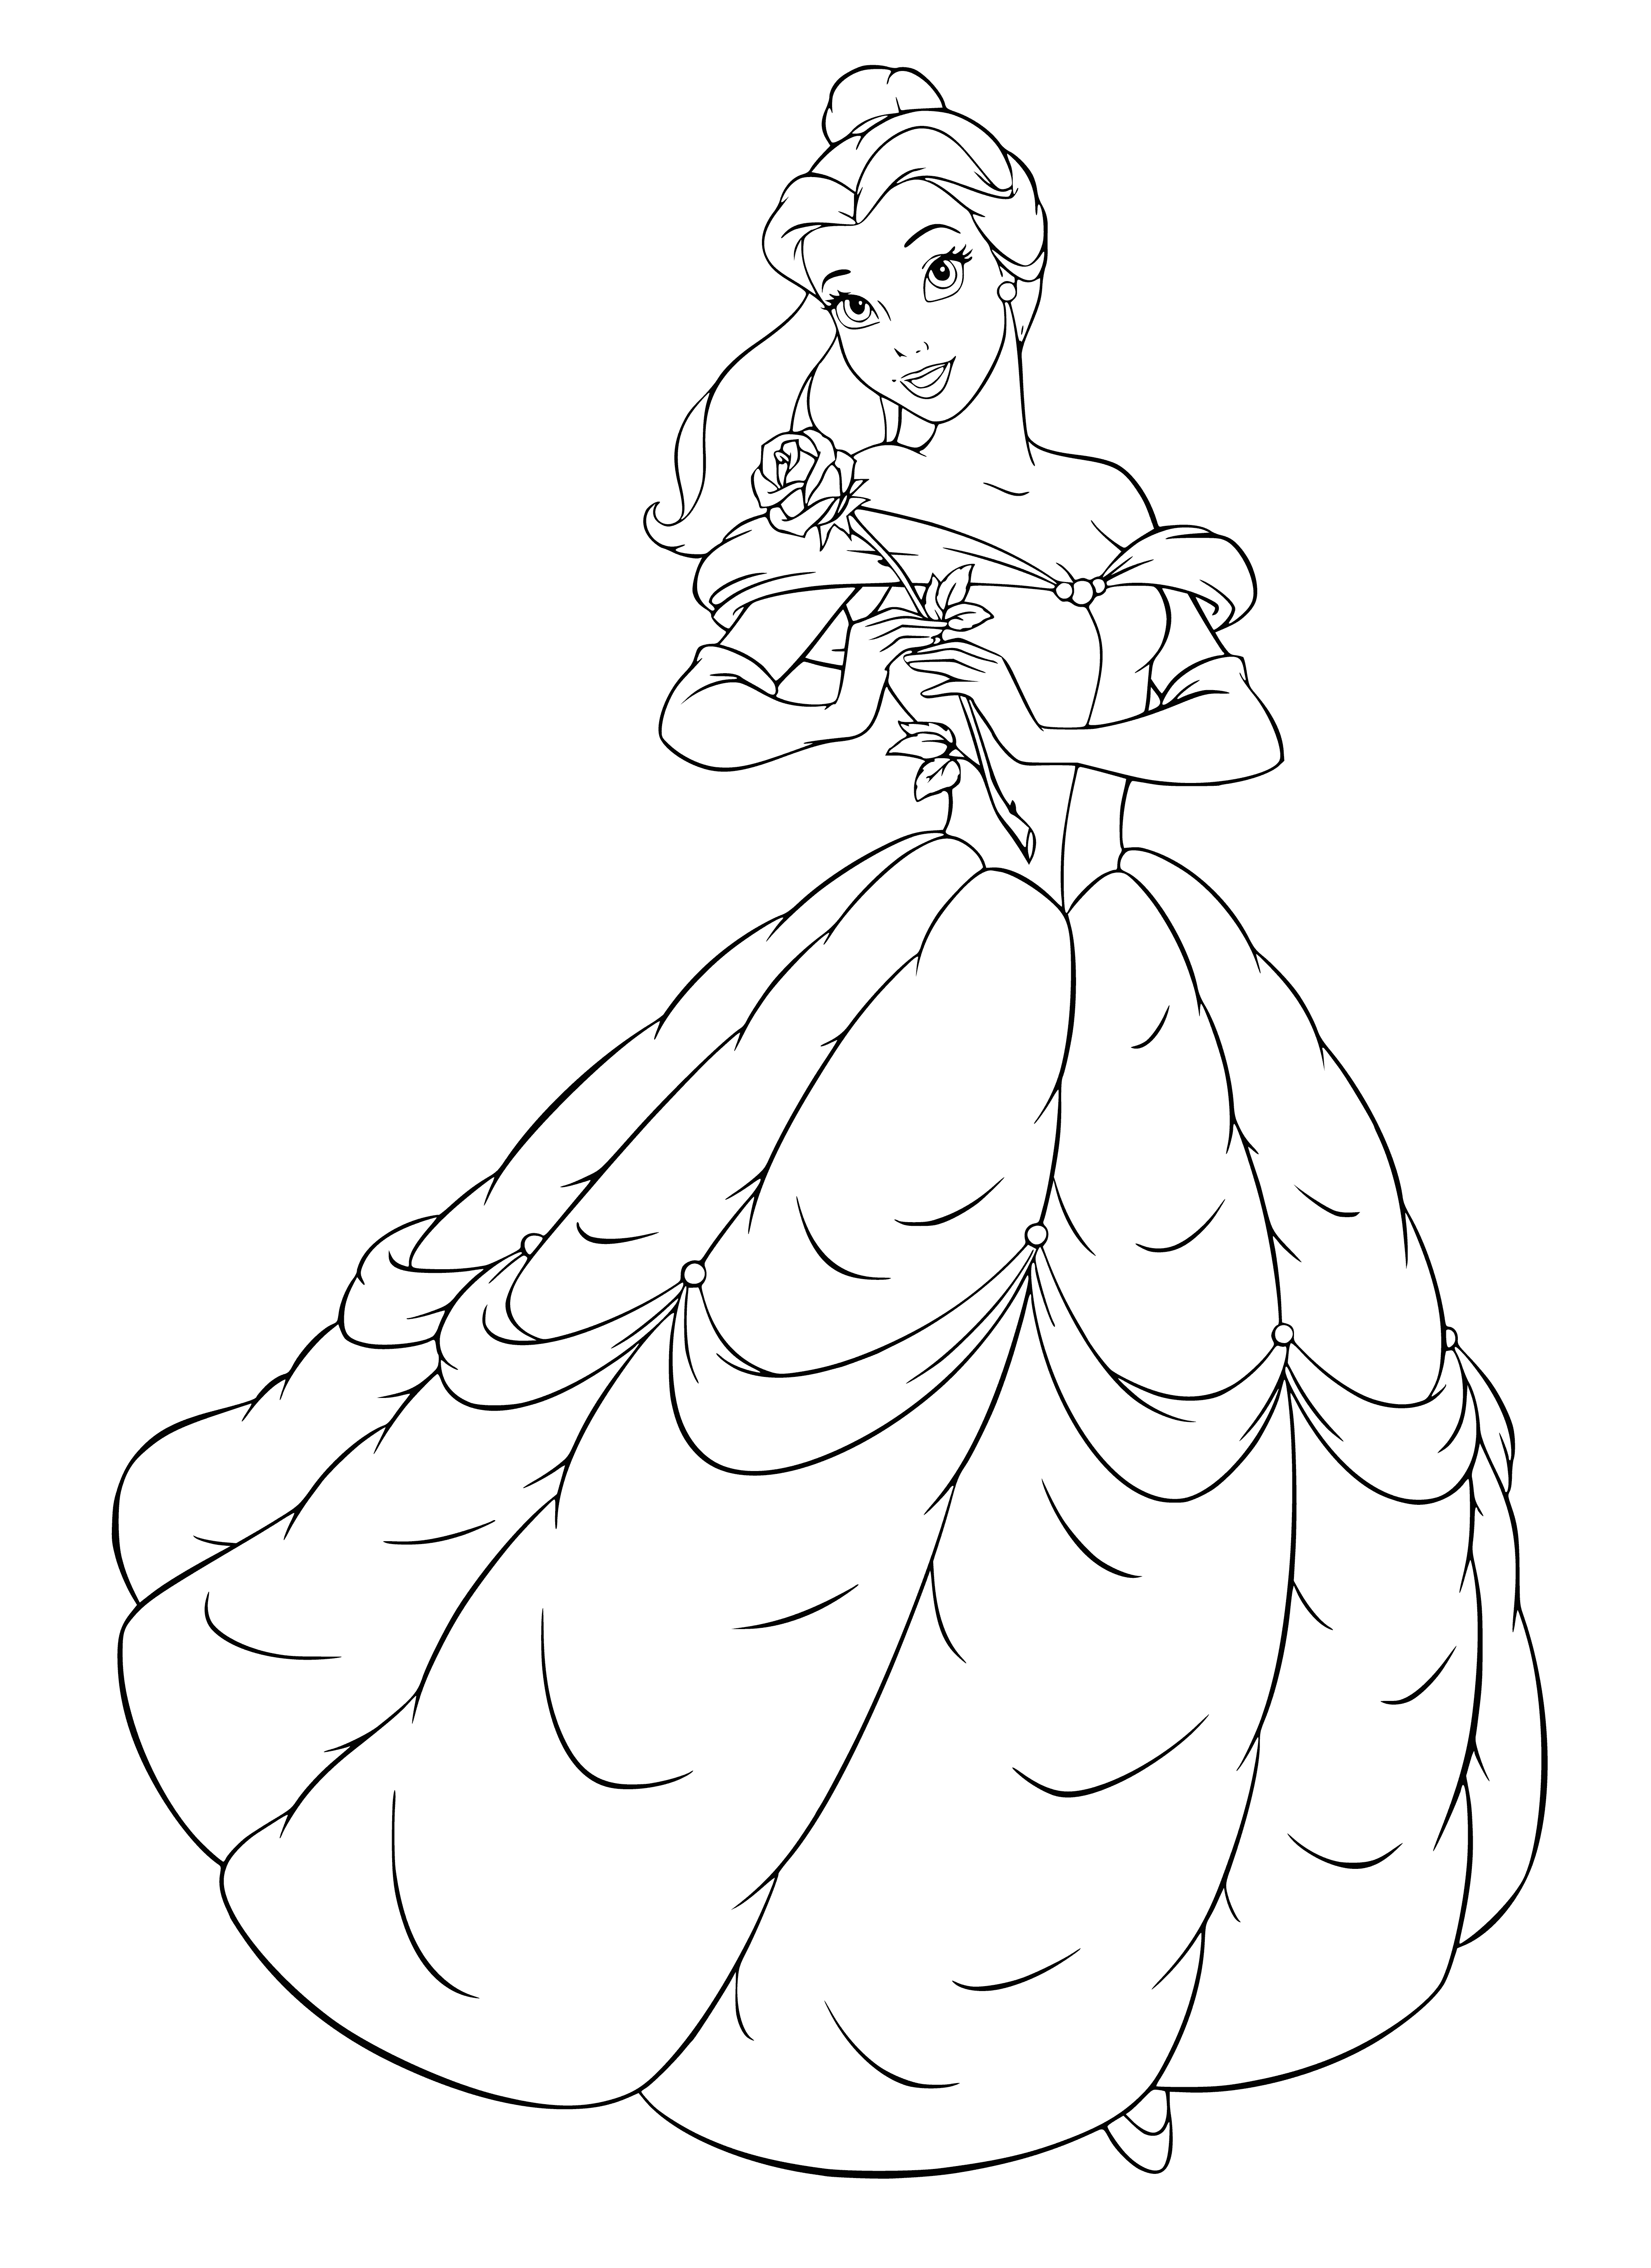 Princess Belle coloring page